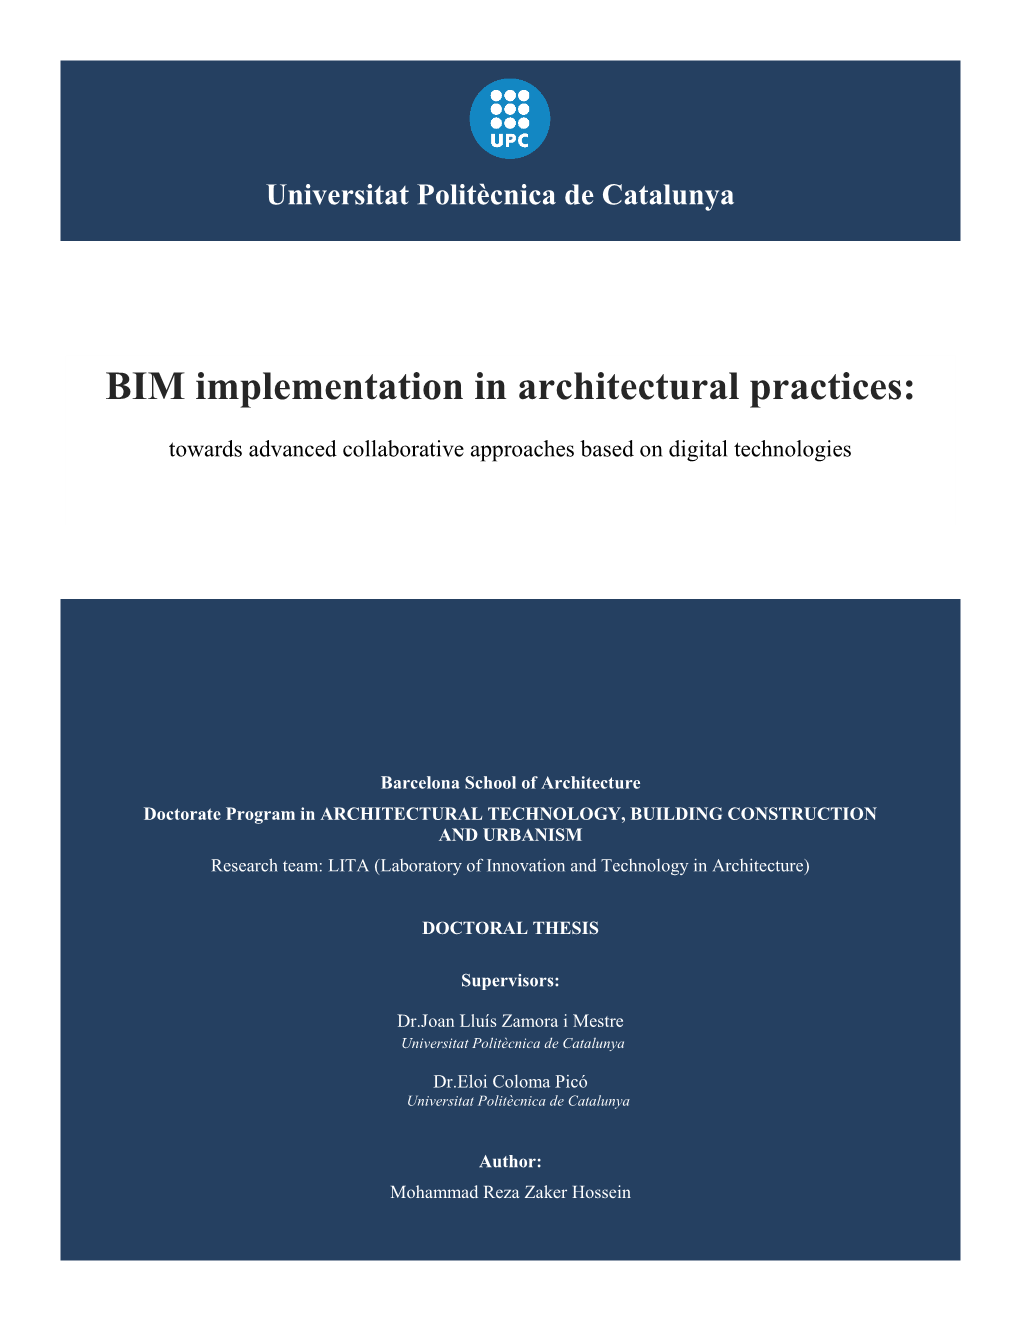 BIM Implementation in Architectural Practices